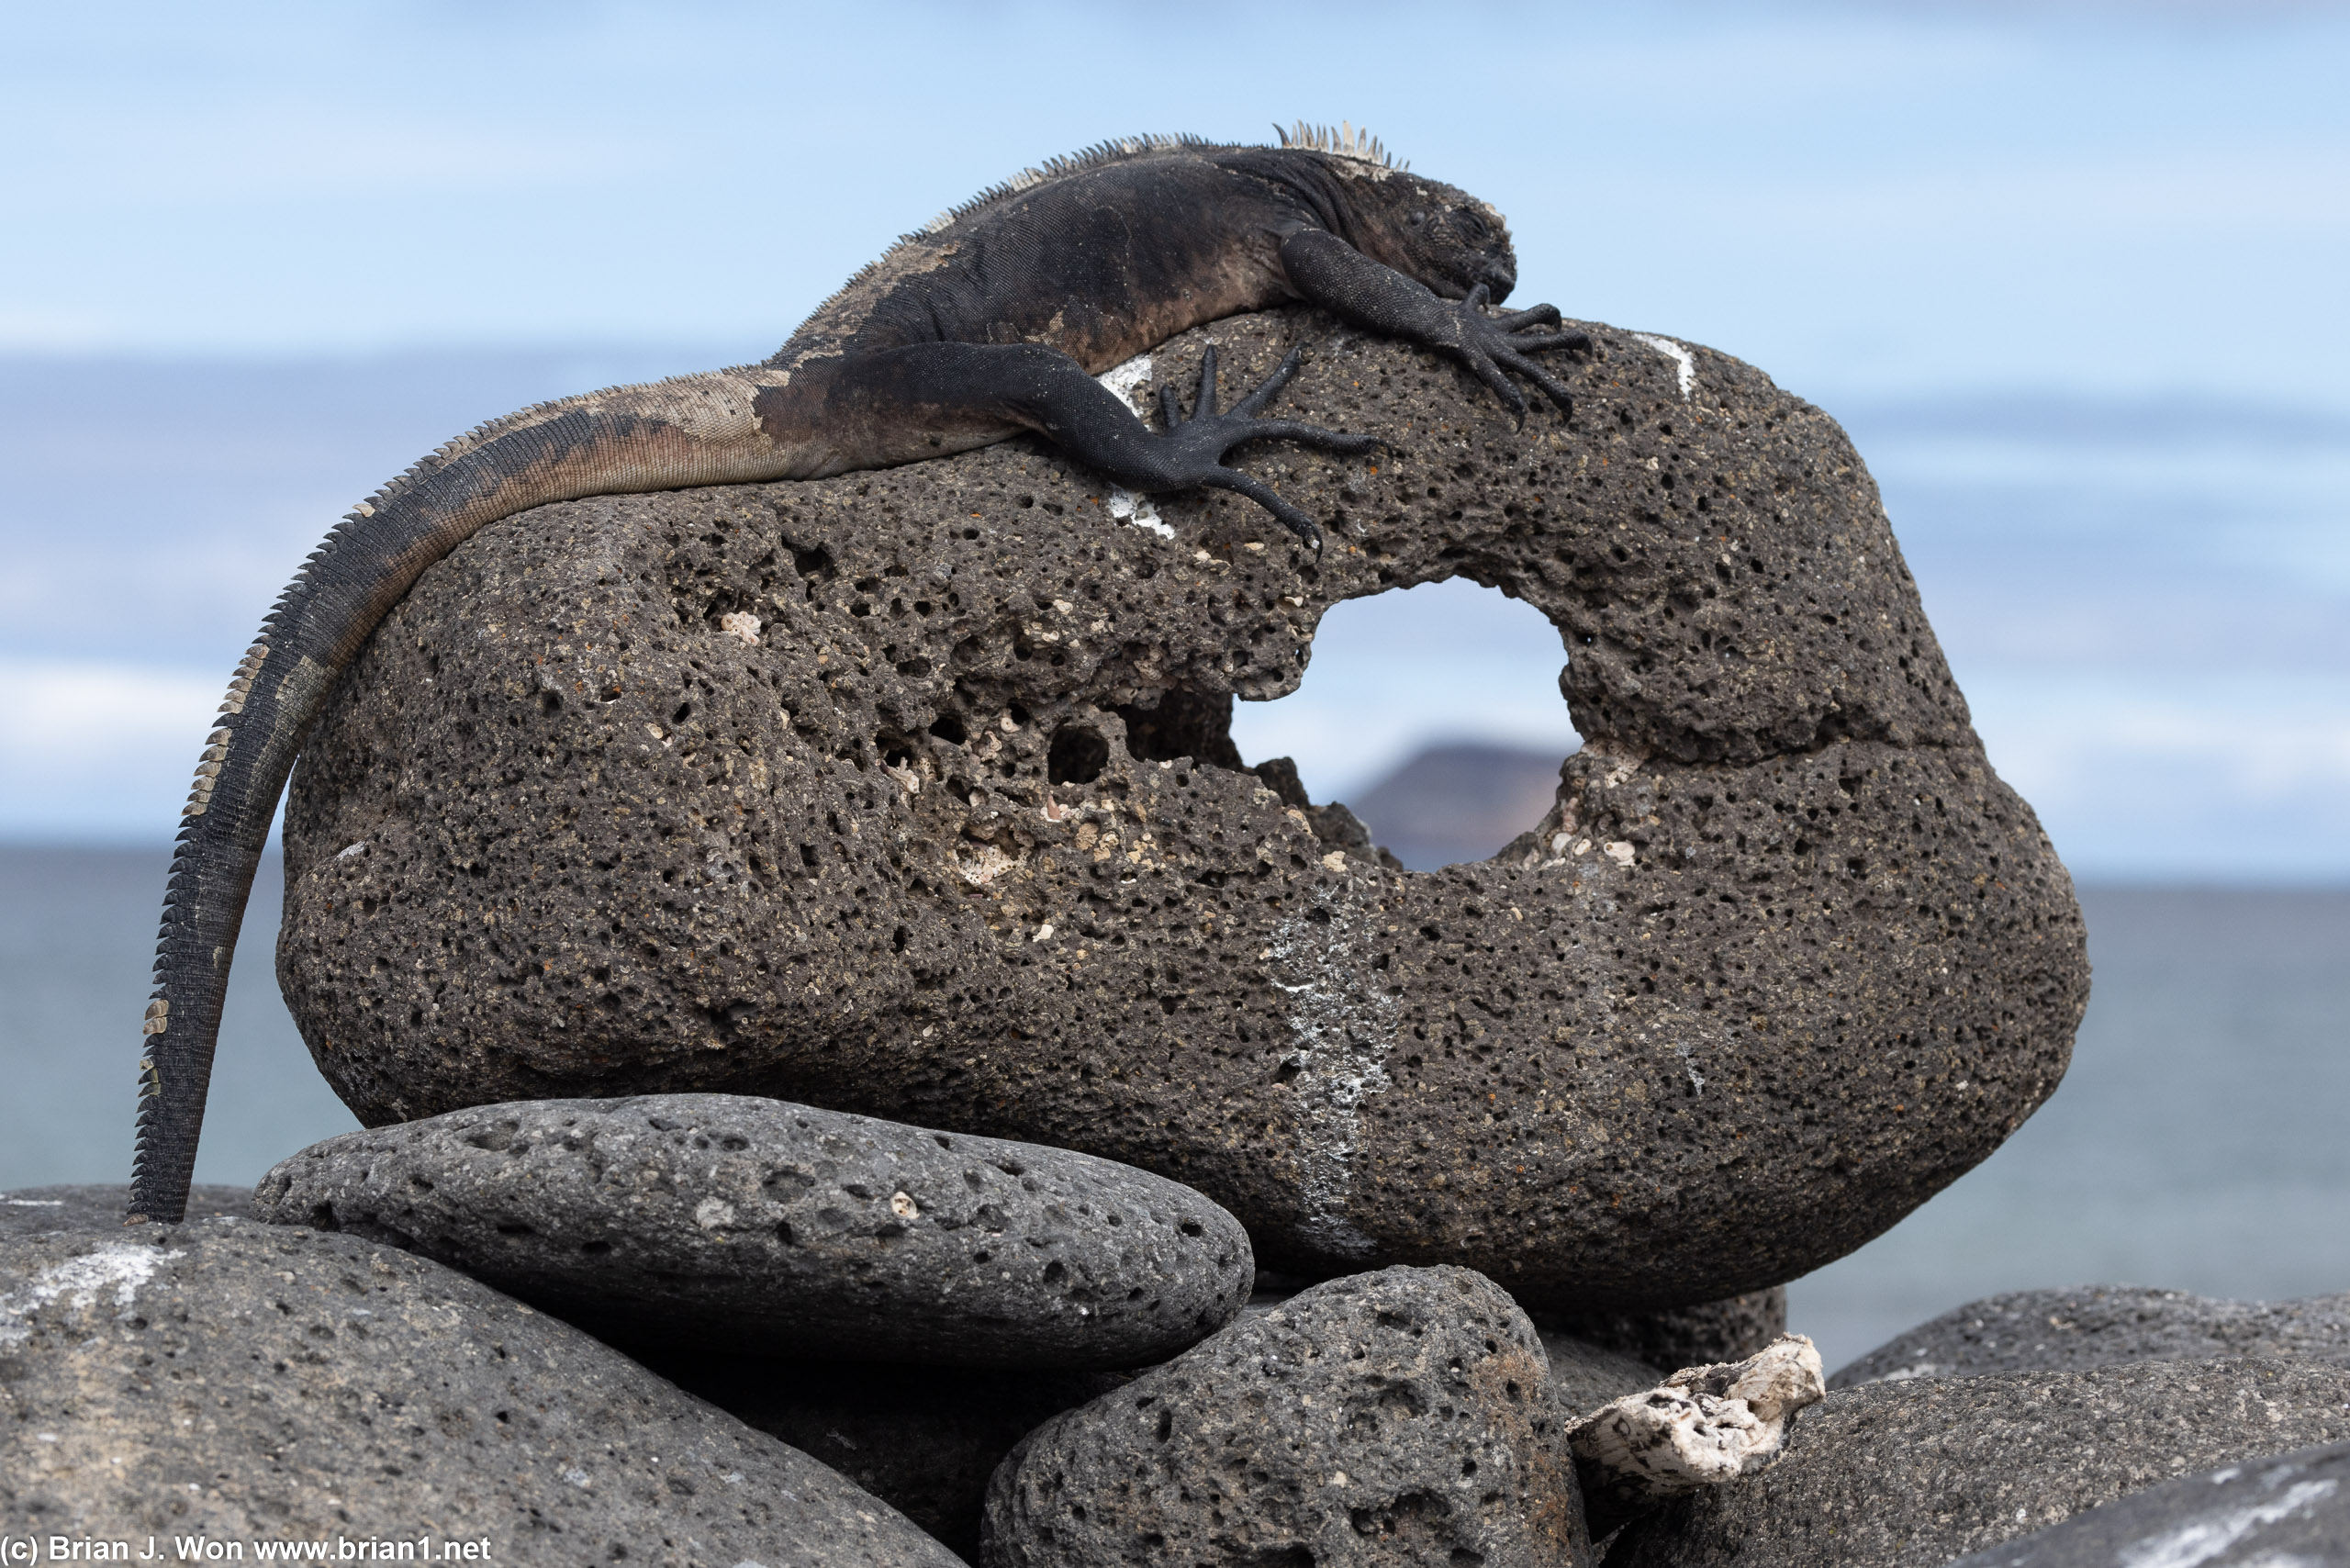 Marine iguana atop a rock.